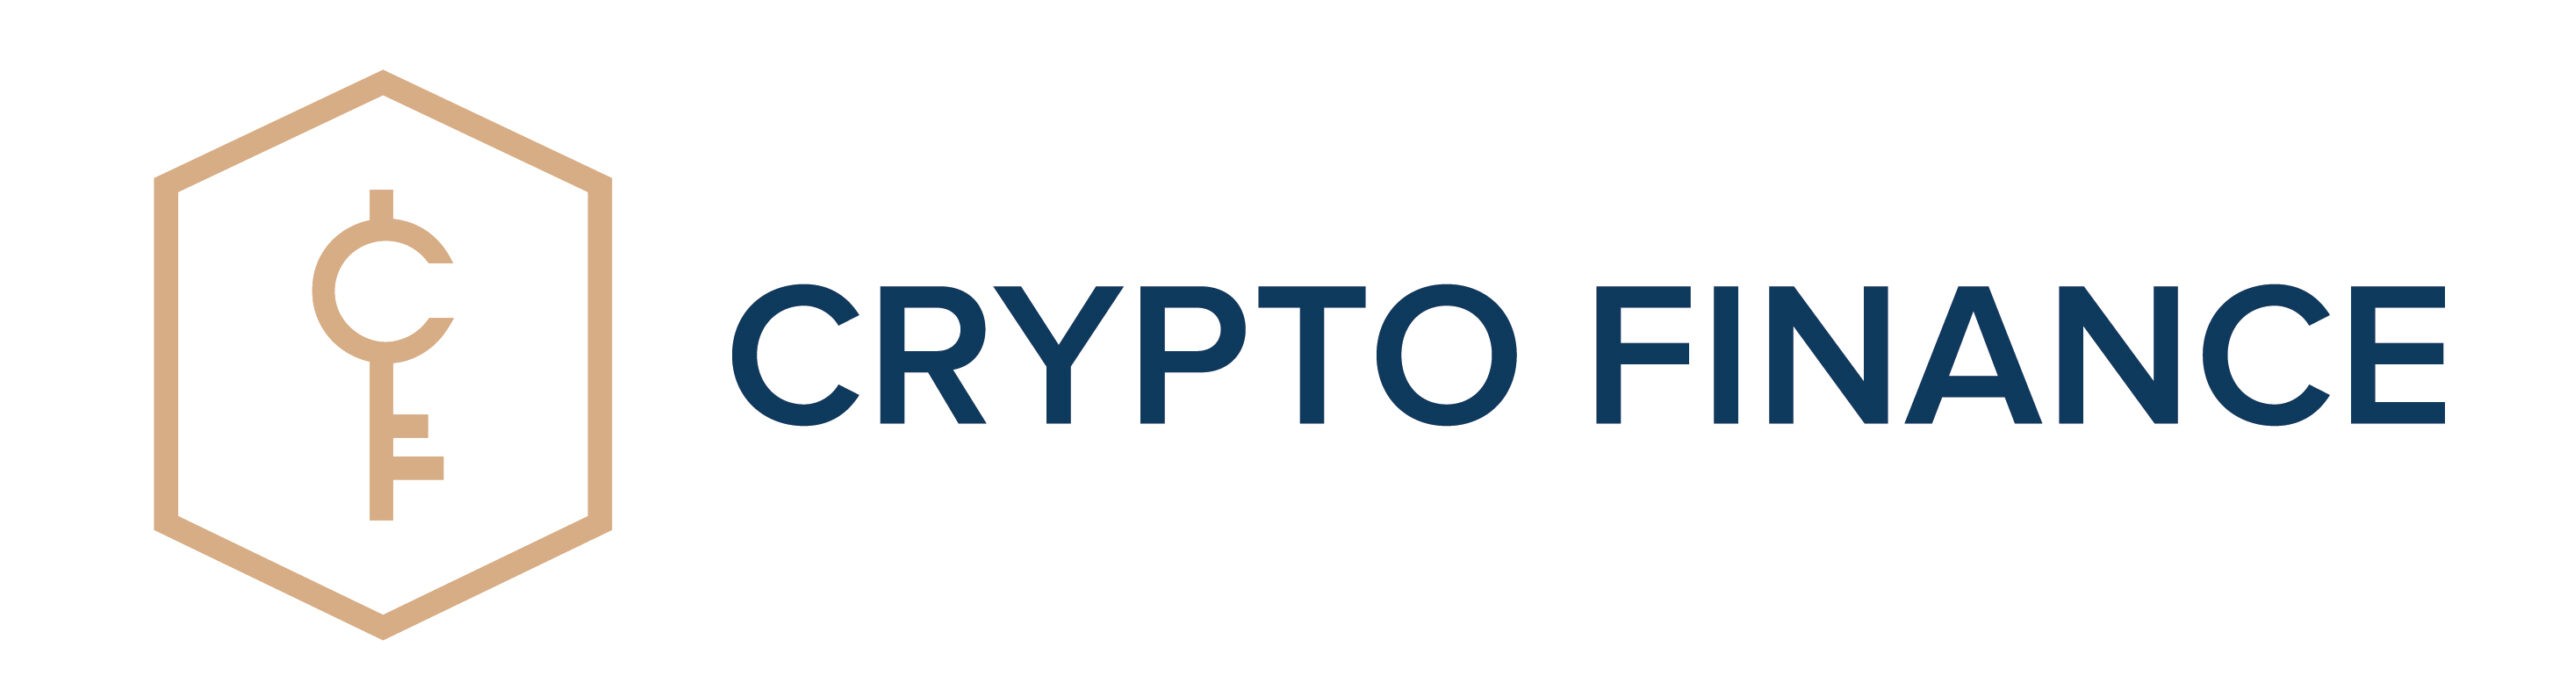 institutional crypto trading platform